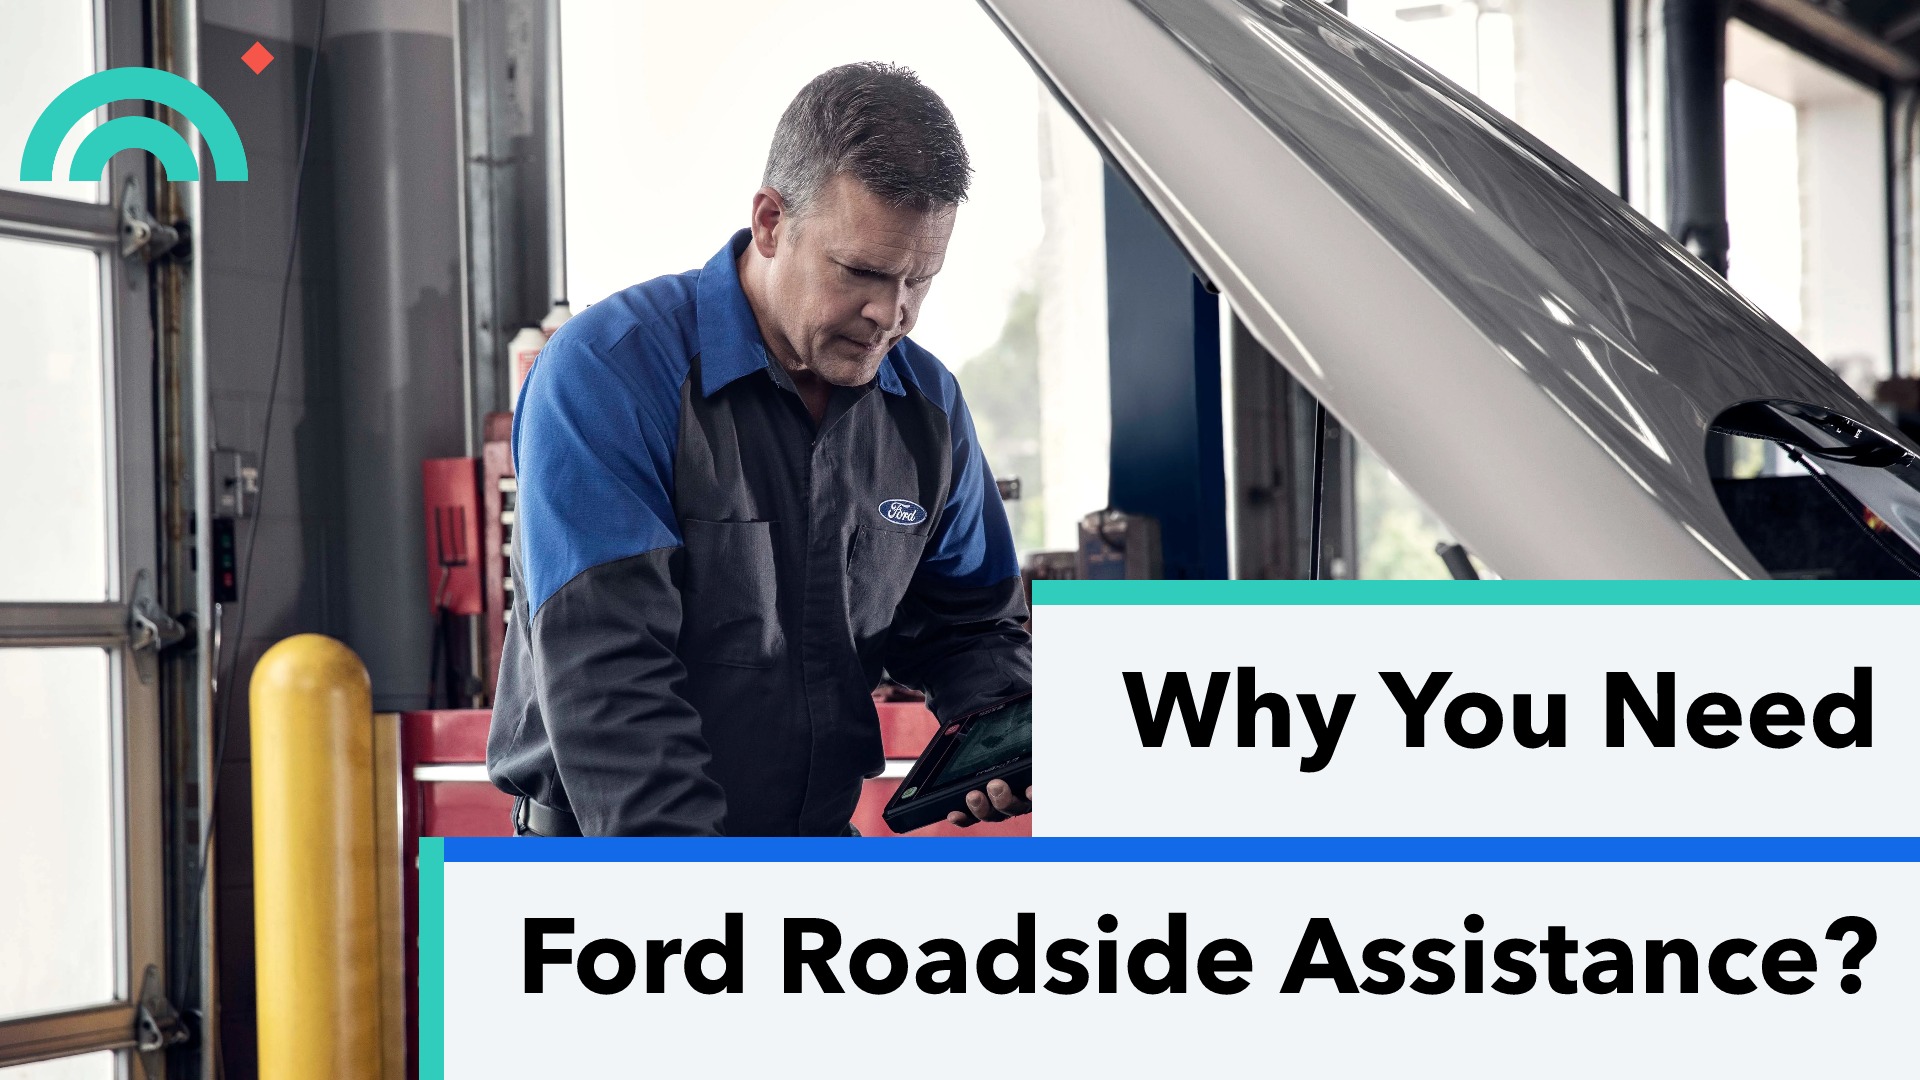 Ford Roadside Assistance